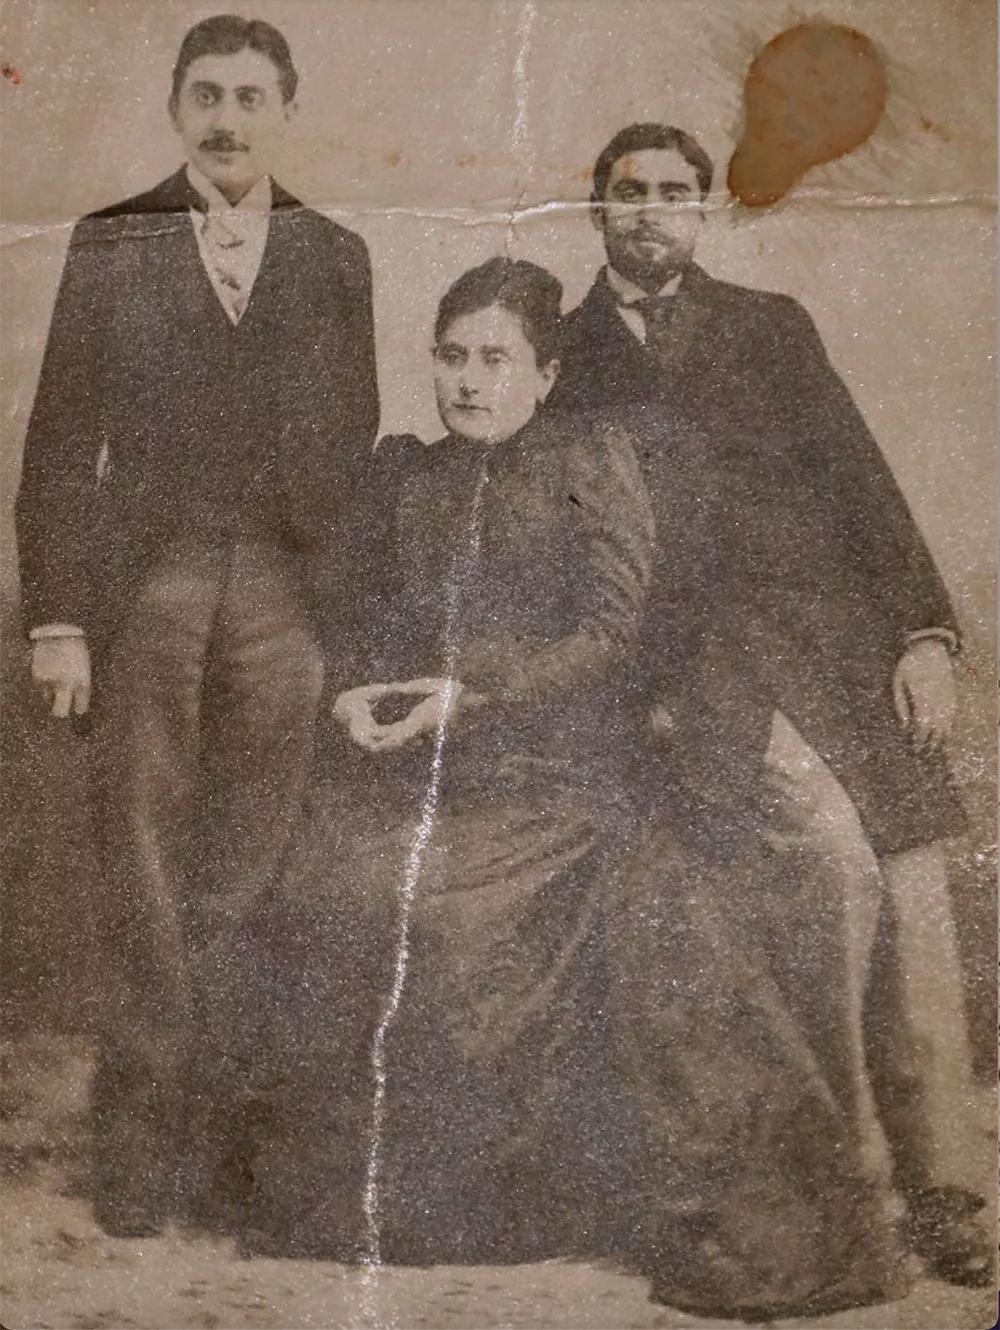 Marcel con su hermano Robert y su madre Jeanne Weil Proust.